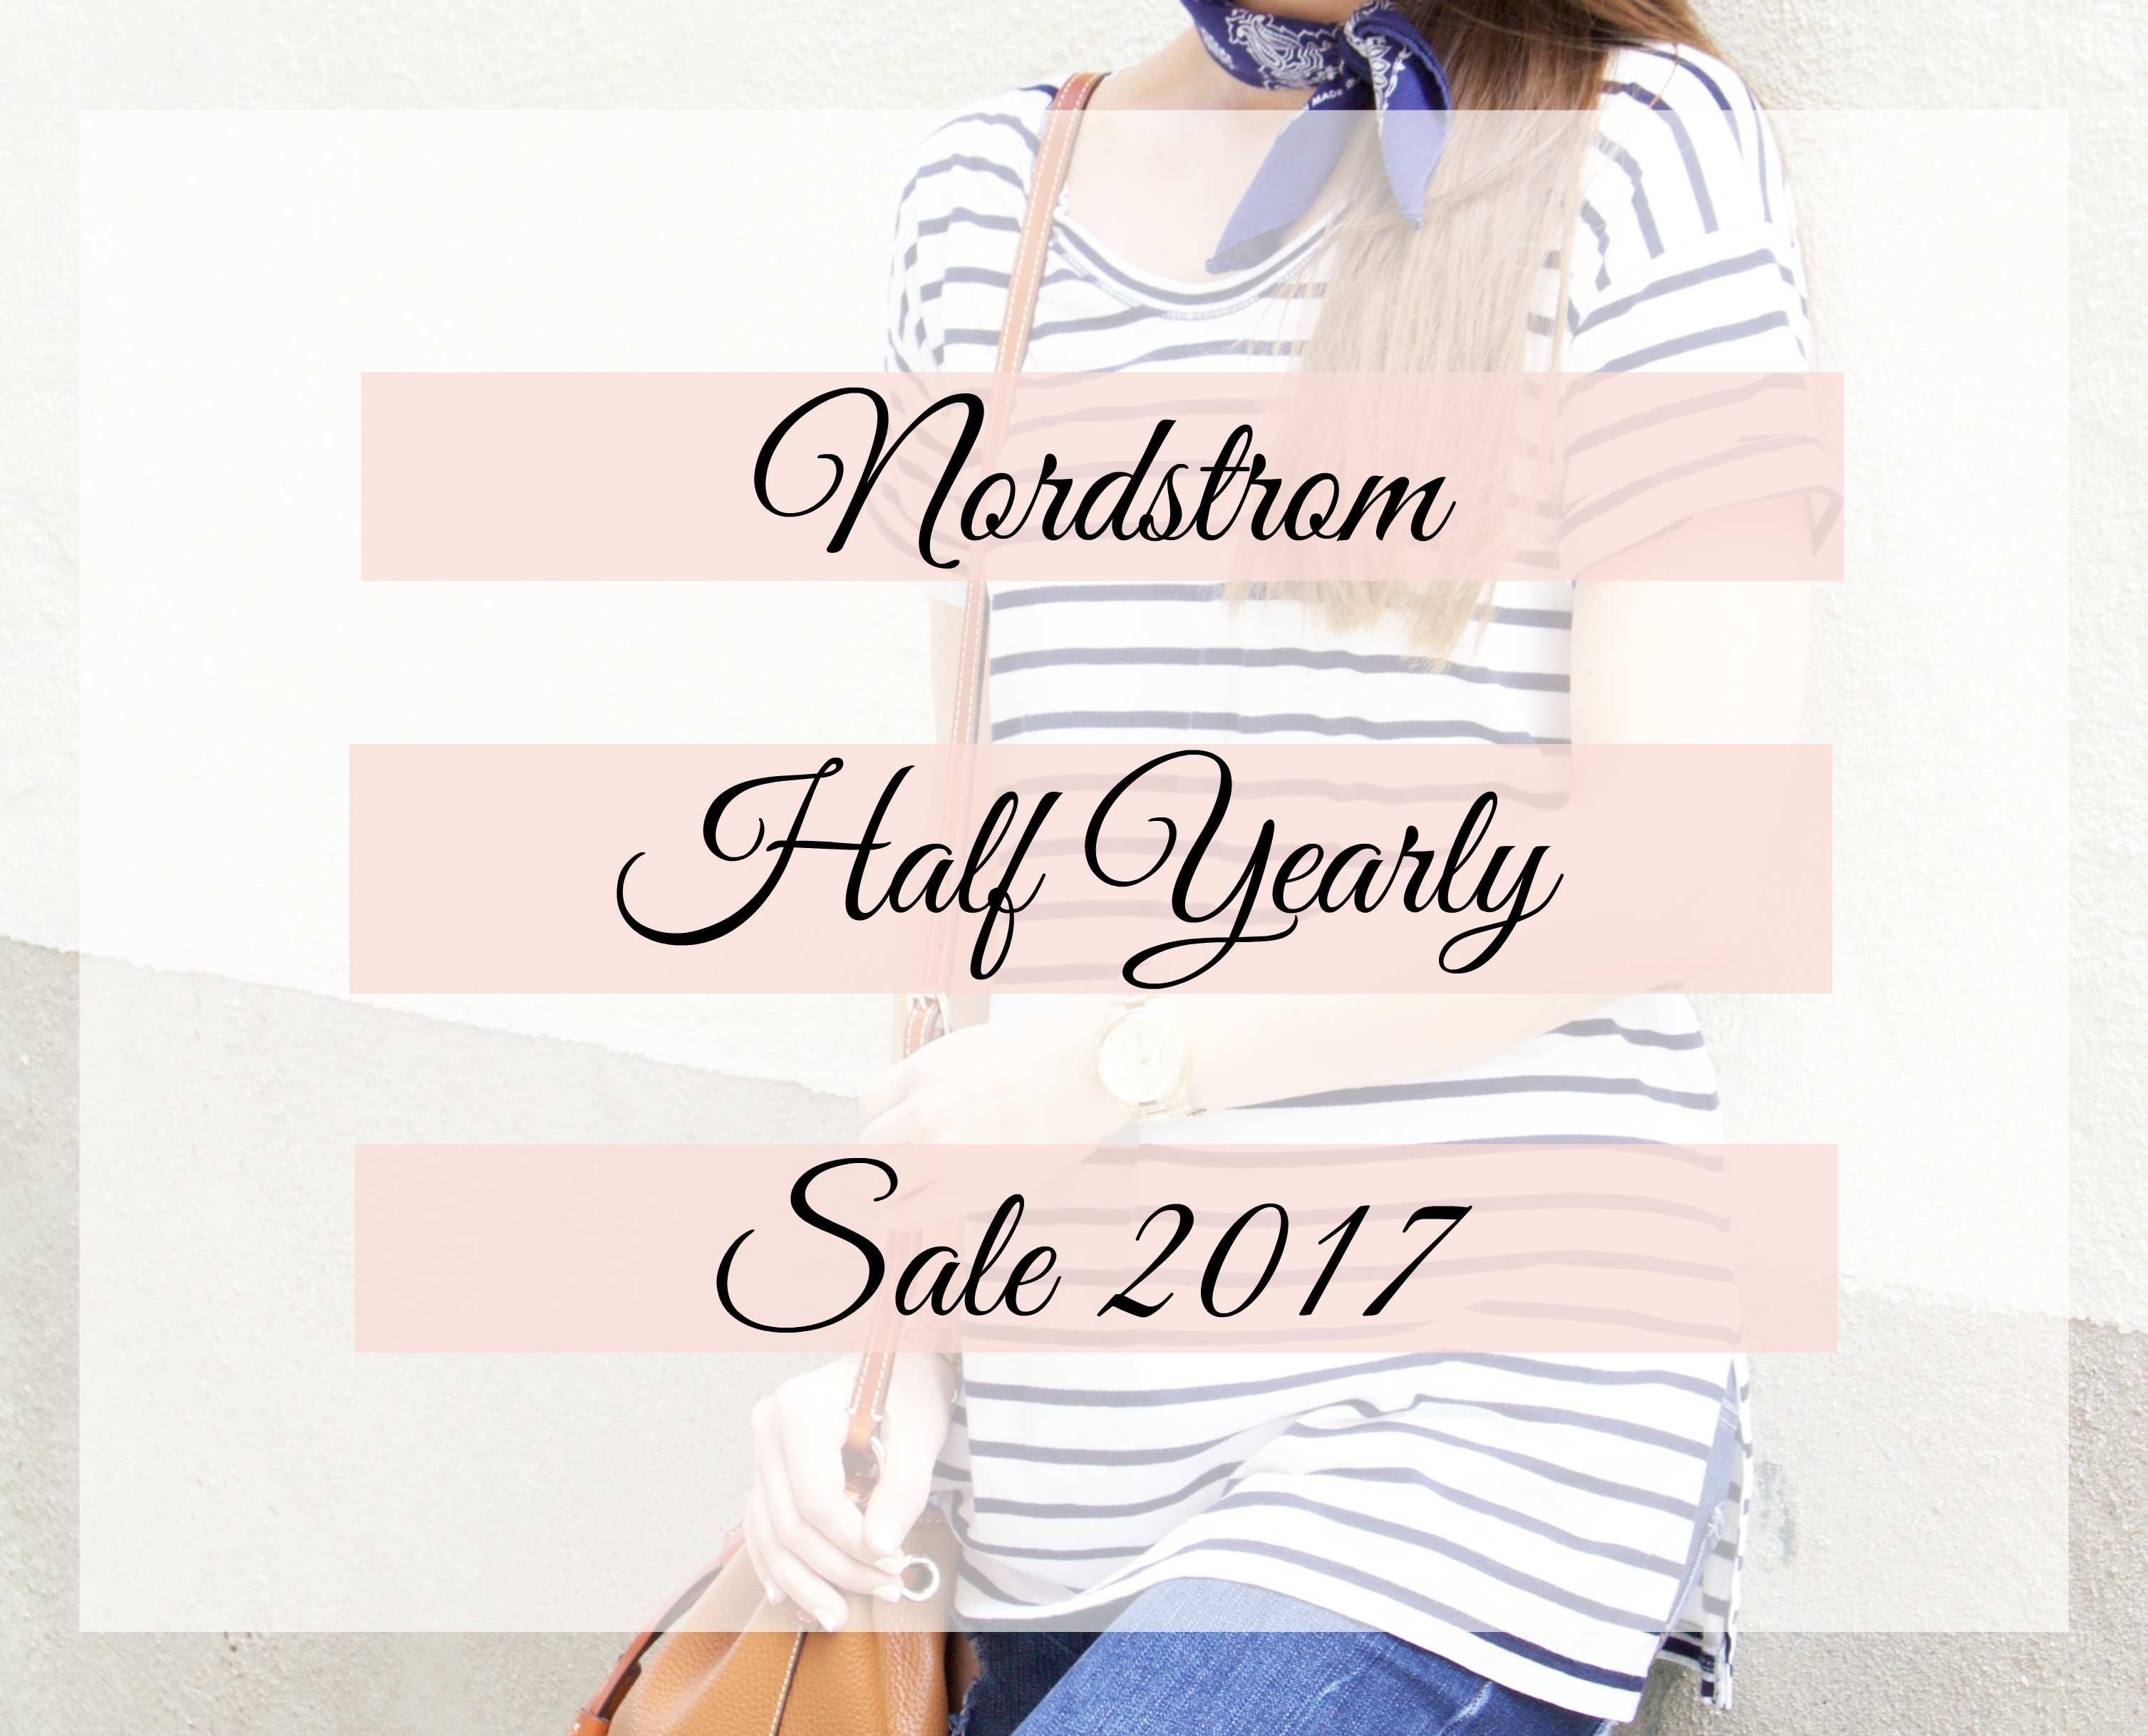 Nordstrom Half Yearly Sale 2017 picks